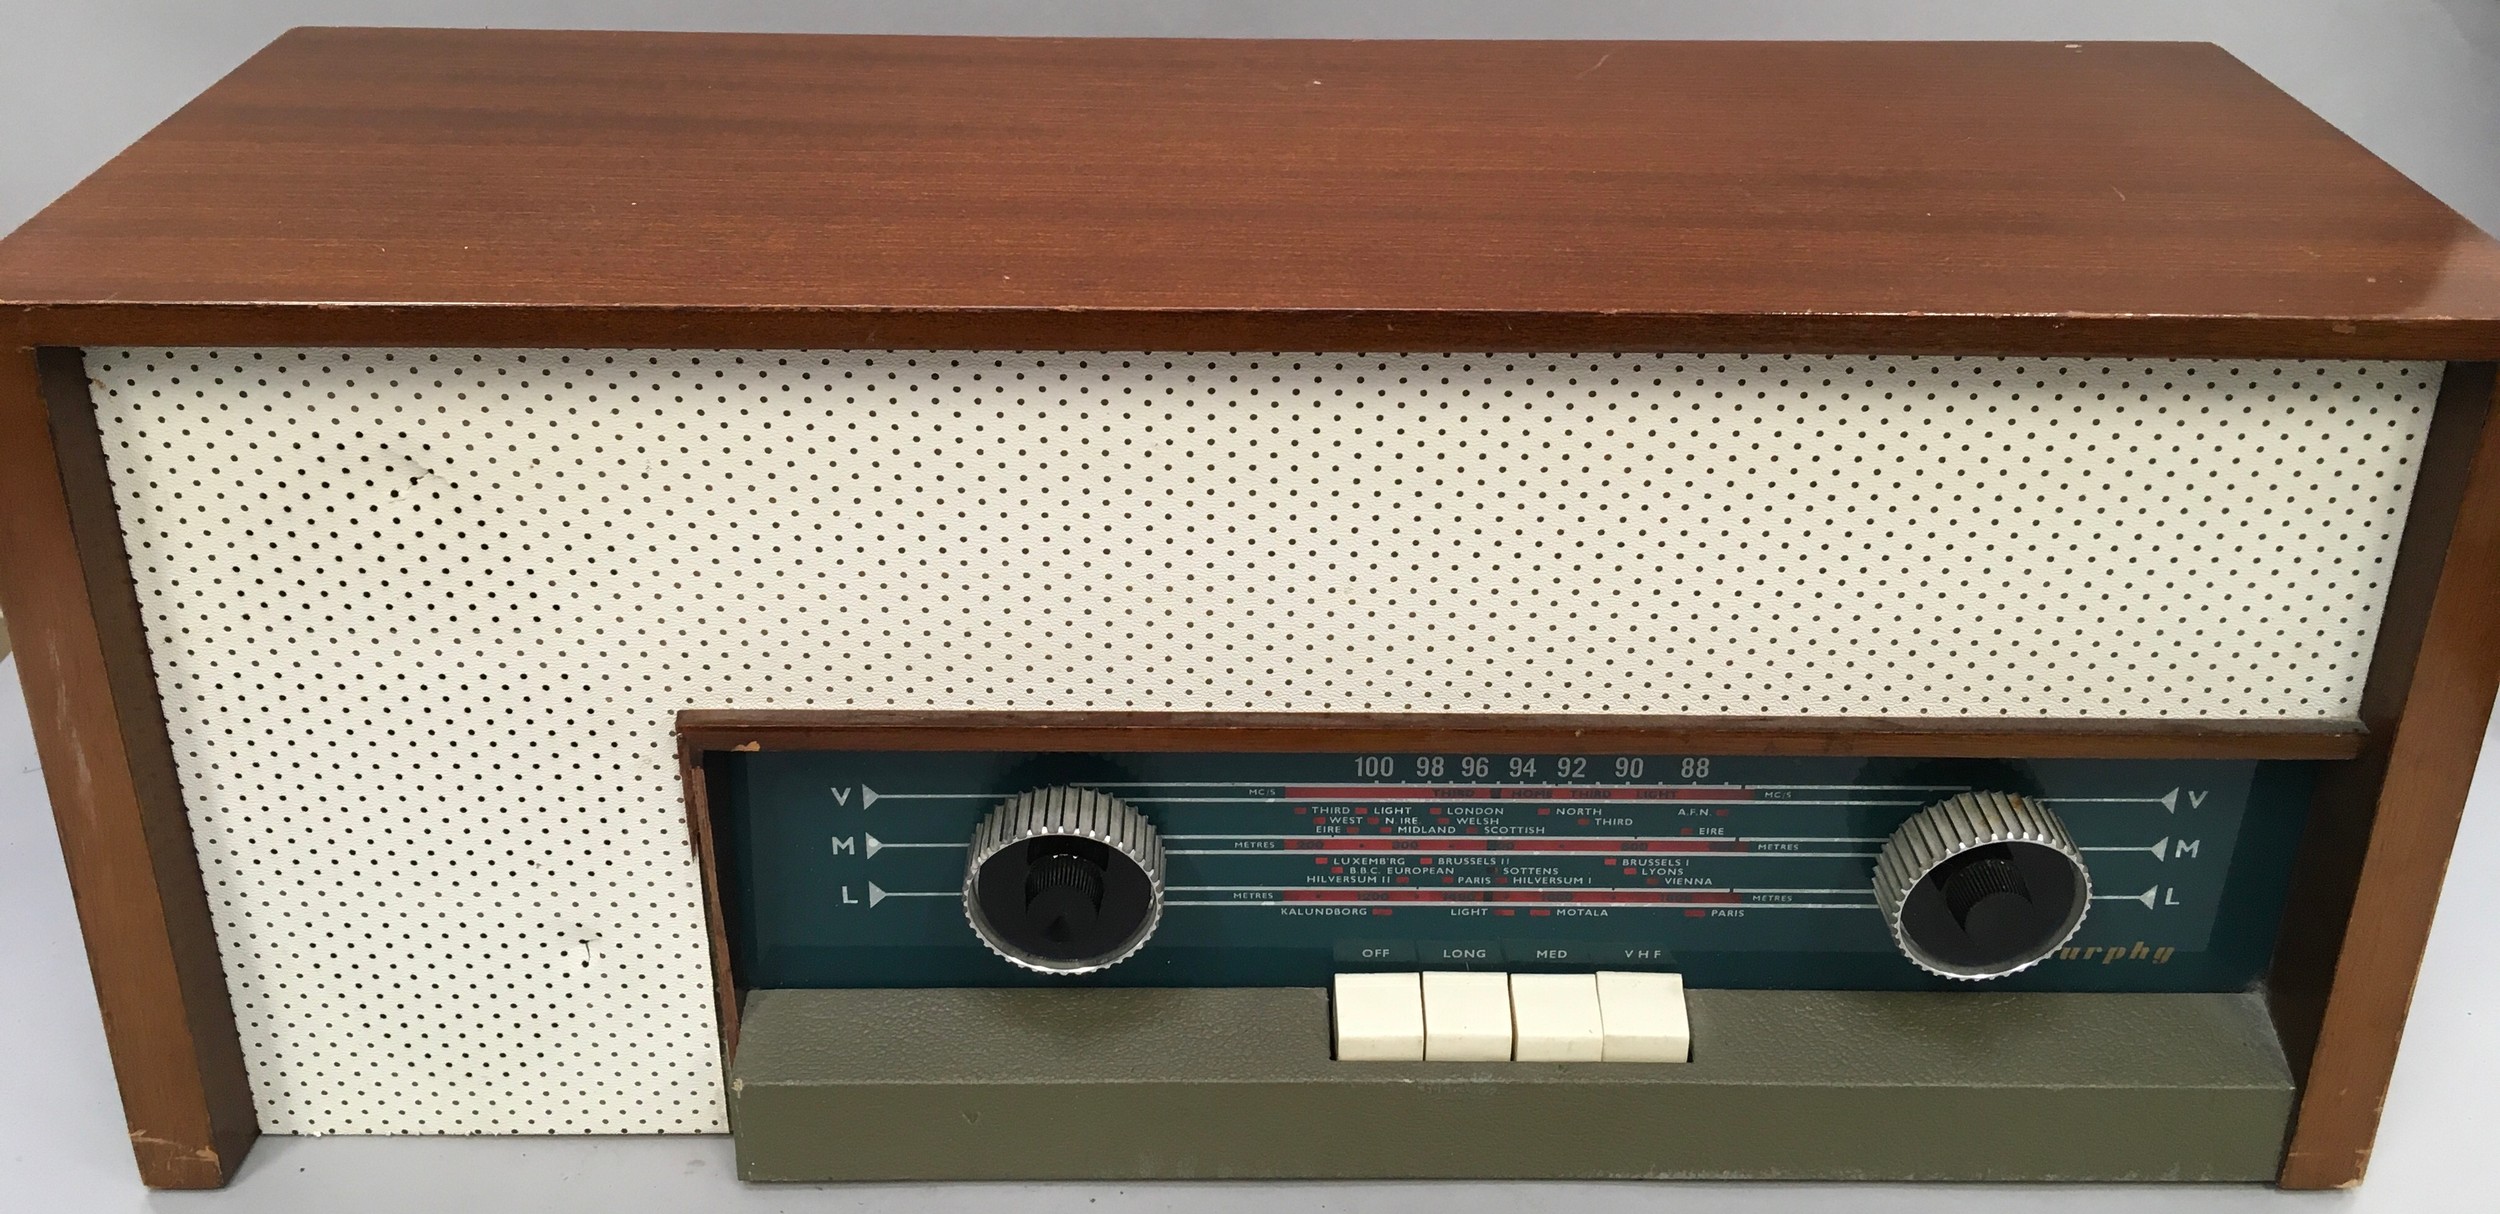 Vintage 1950s Murphy valve Radio (vendor advises this was very first VHF Valve Radio).